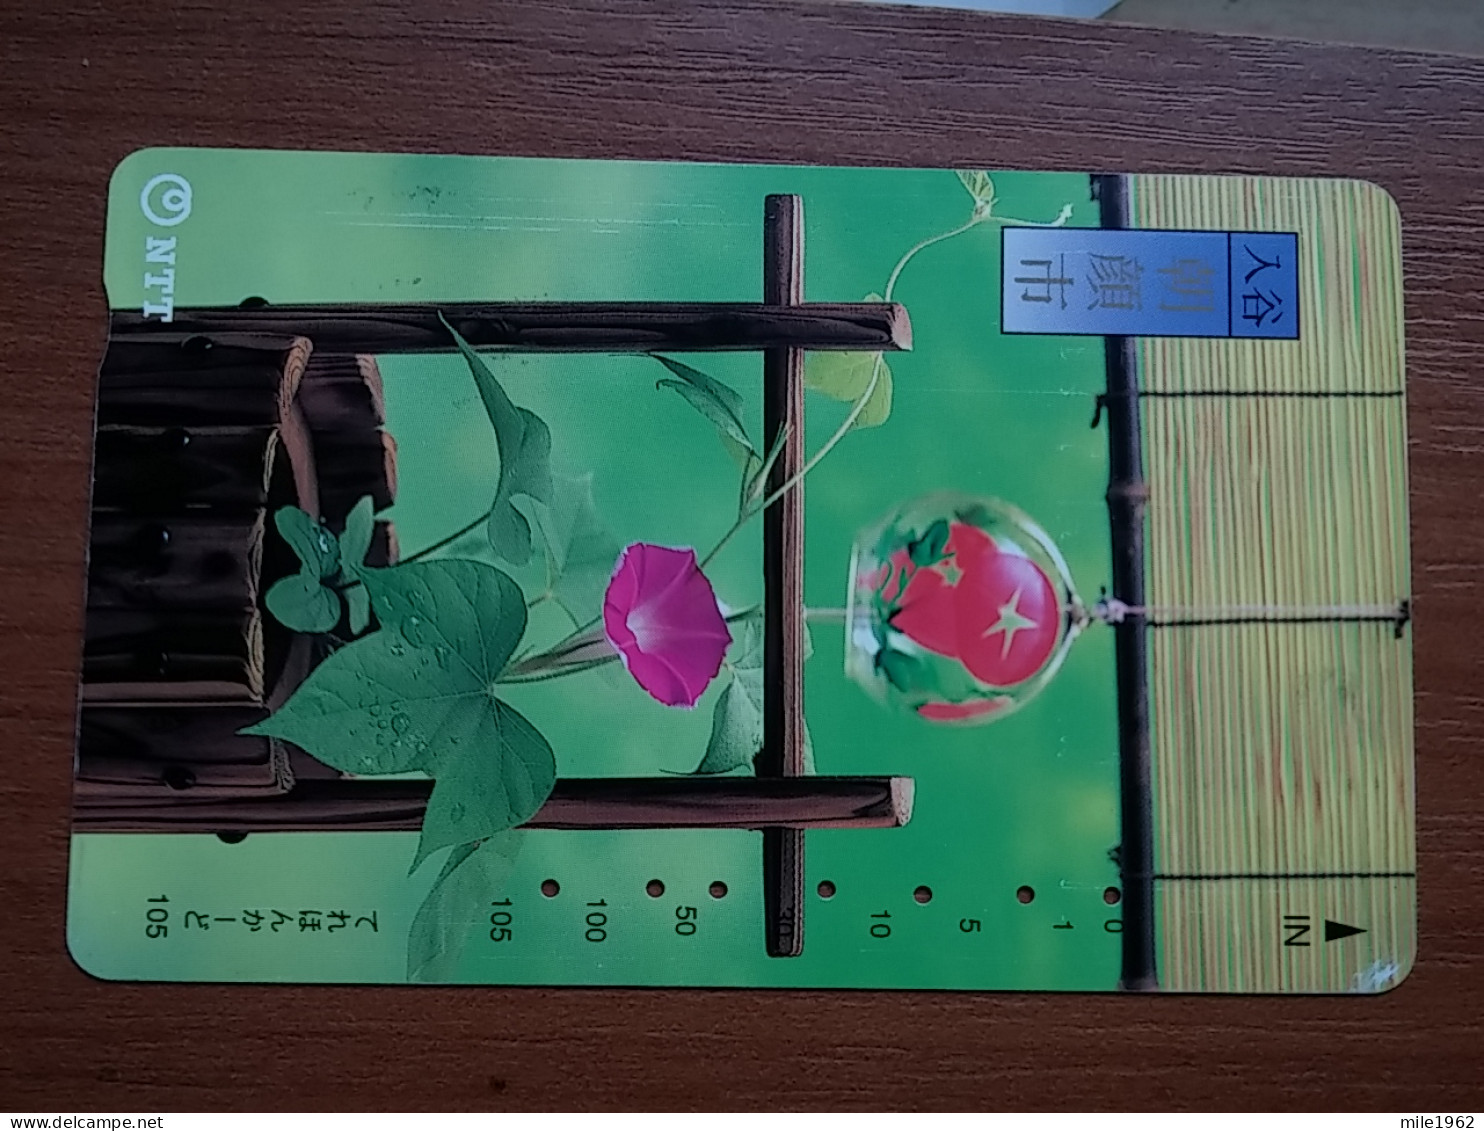 T-384 - JAPAN, Japon, Nipon, TELECARD, PHONECARD, Flower, Fleur, NTT 231-155 - Bloemen